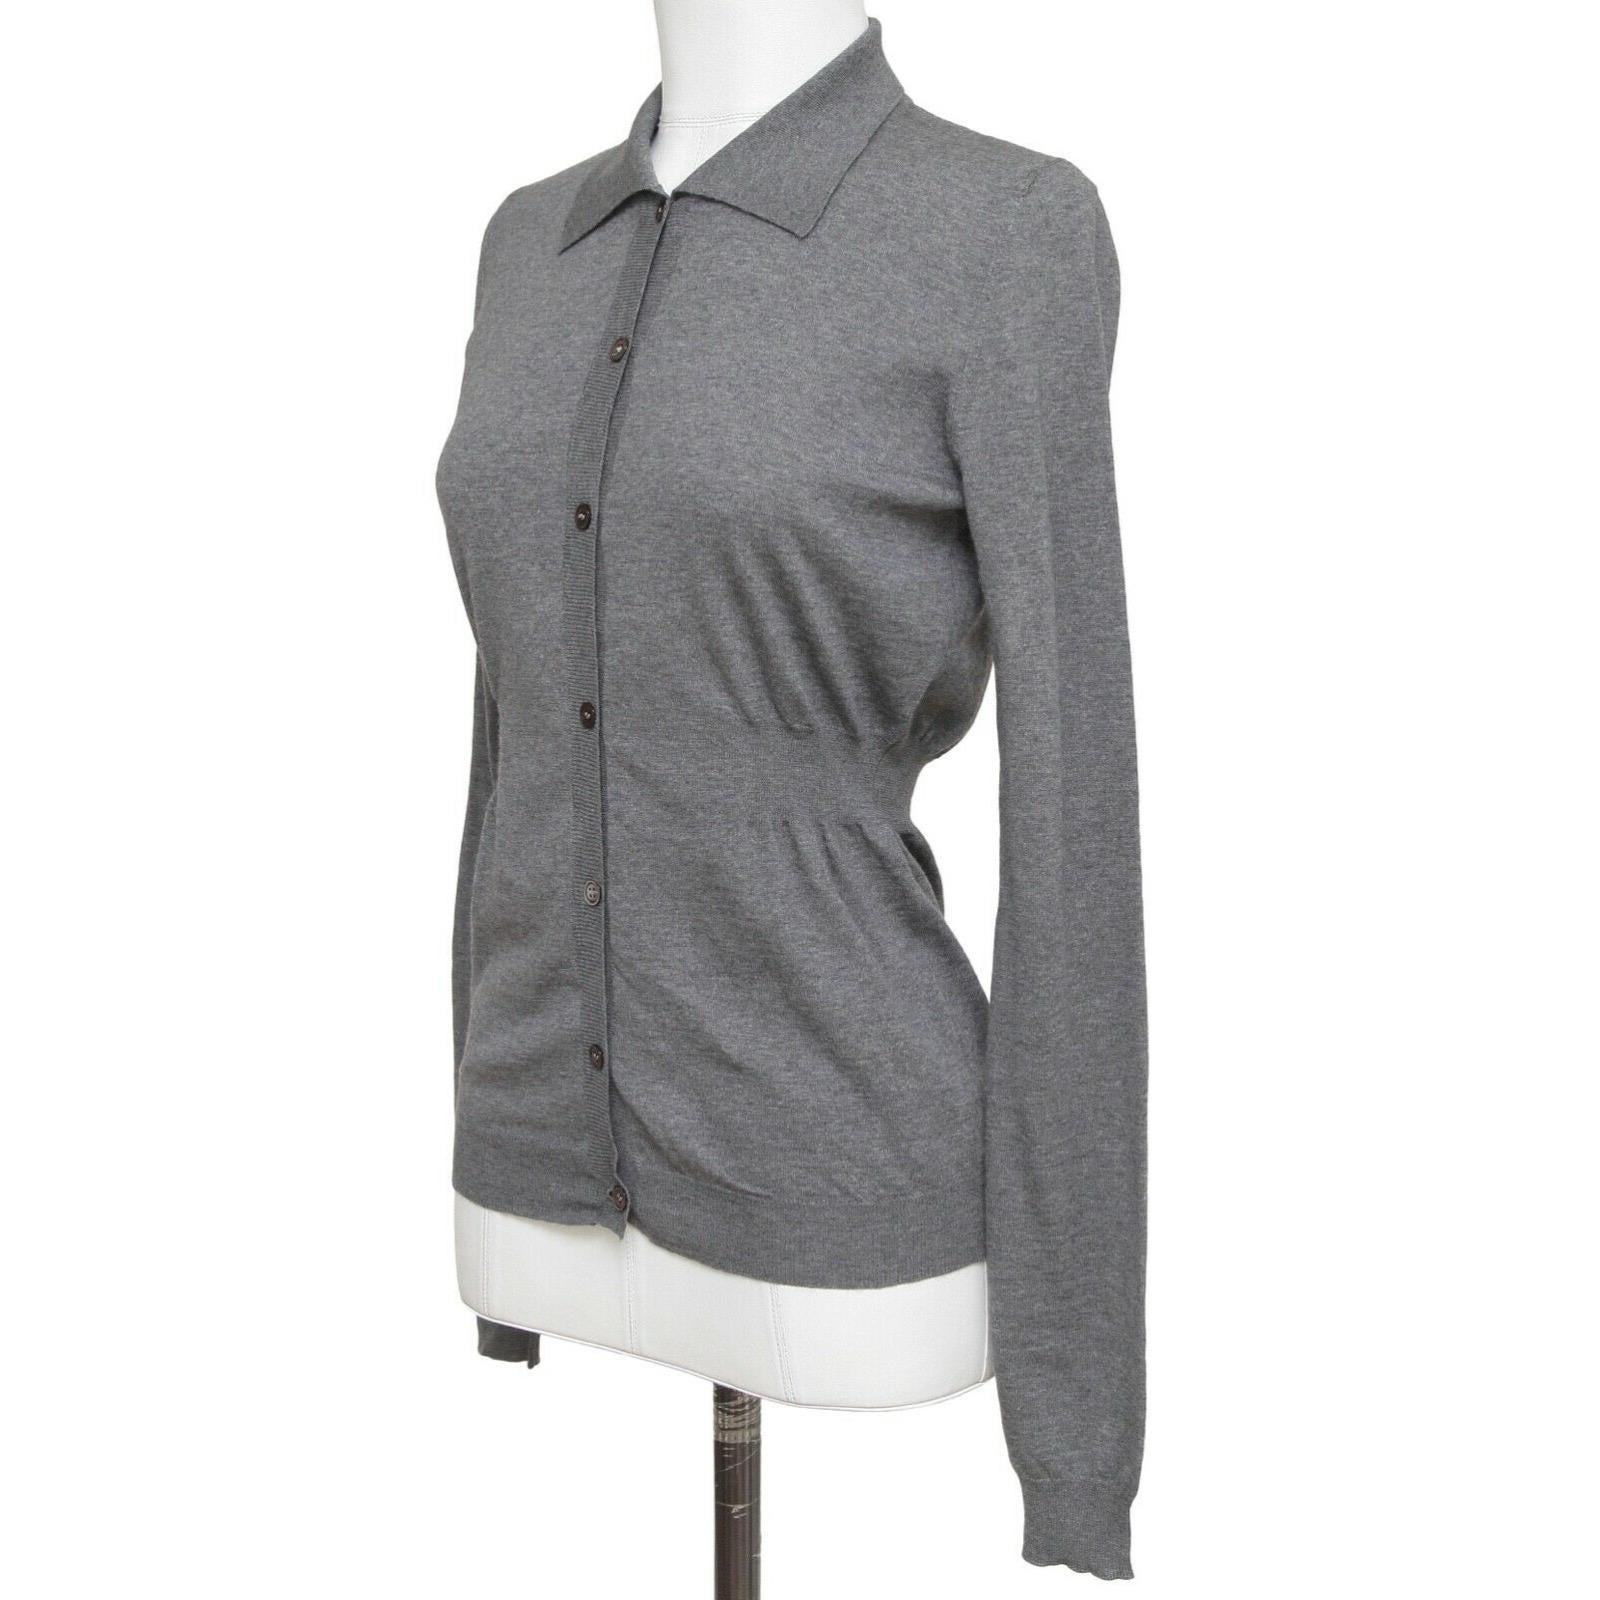 Gray MARNI Sweater Cardigan Knit Top Grey Wool Collar Long Sleeve Button 36